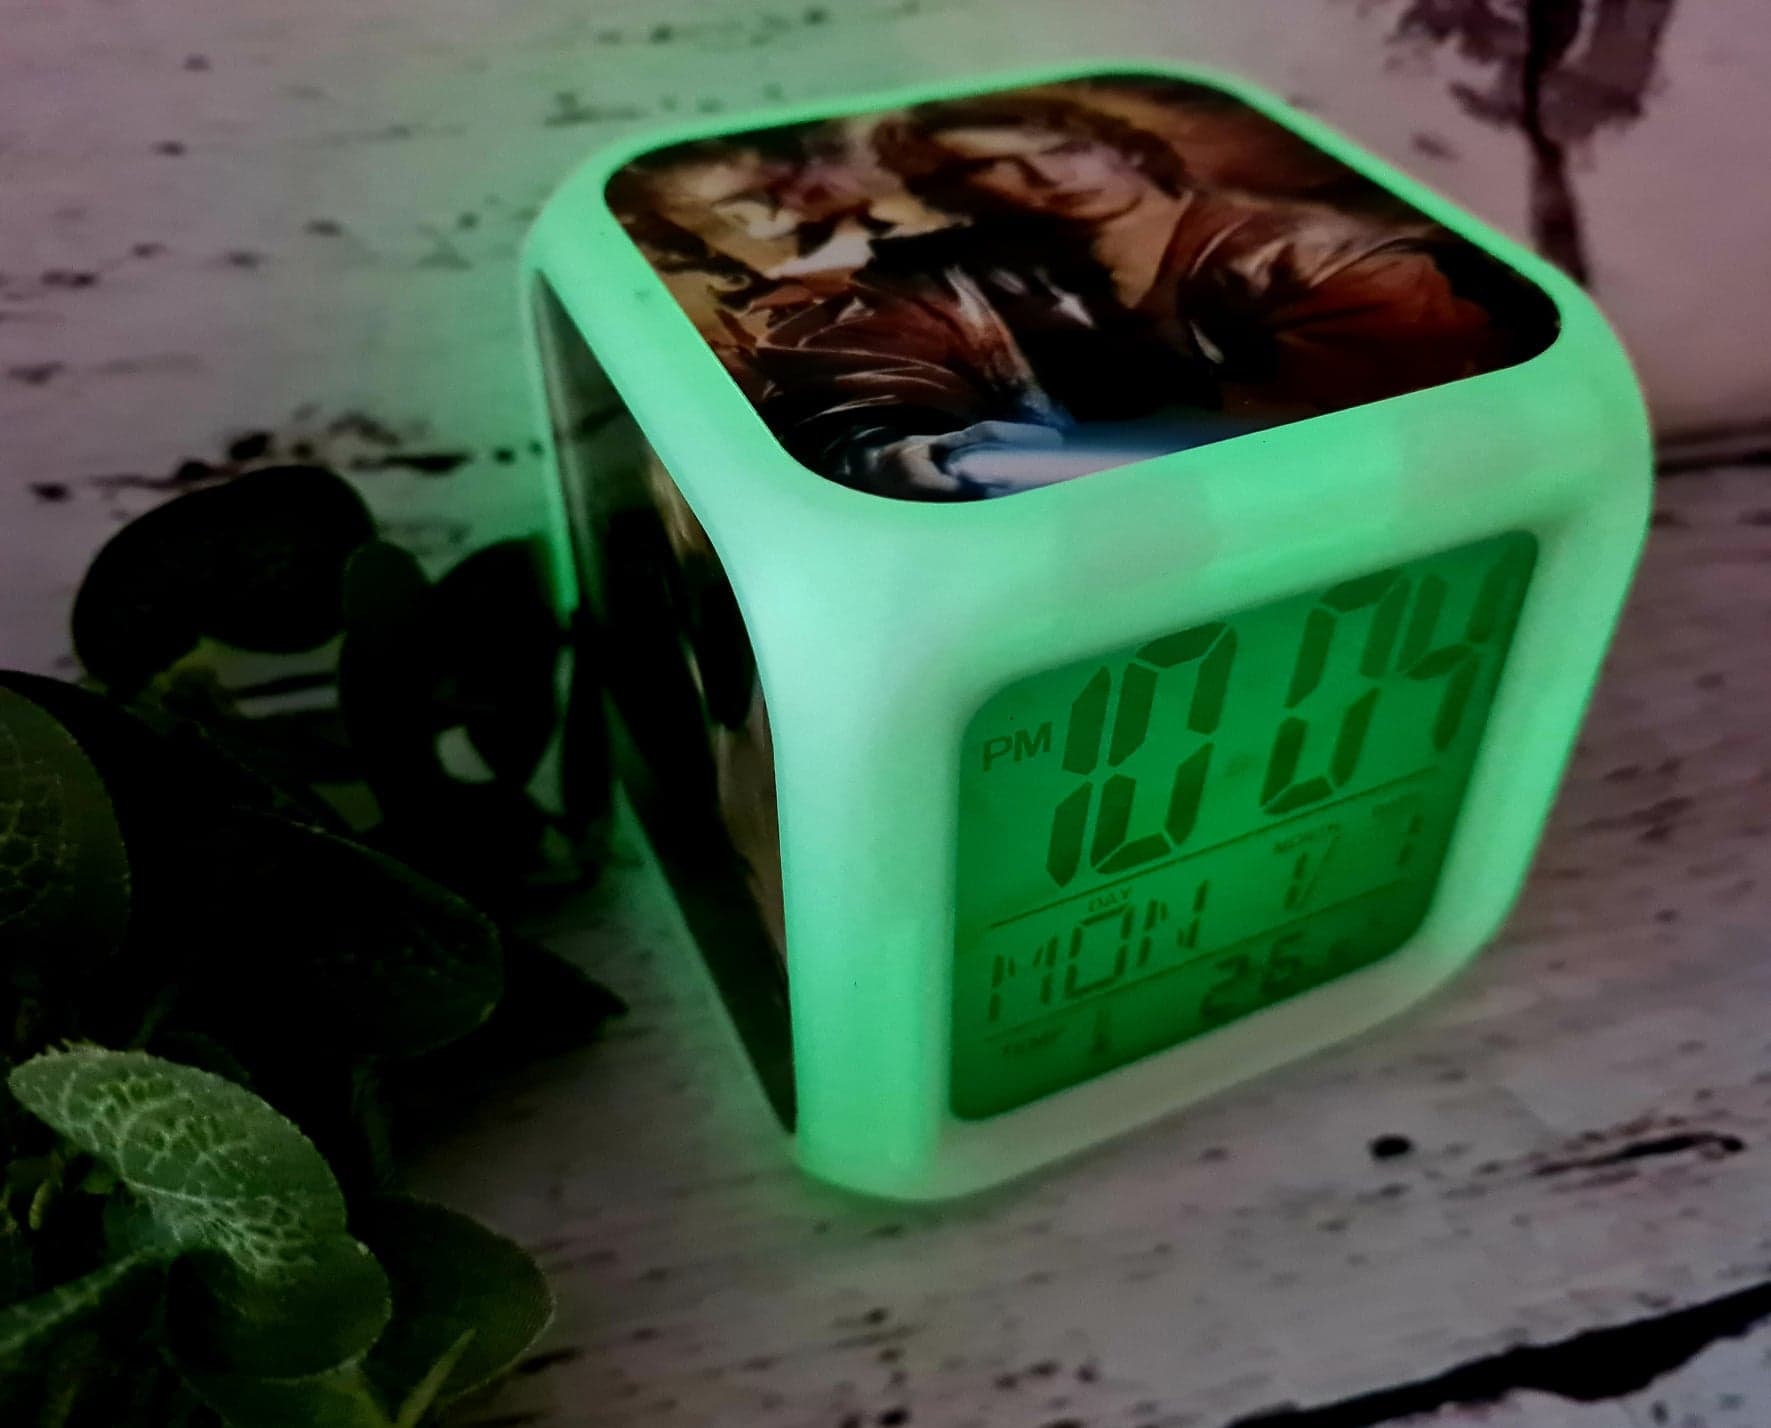 Stitch Design Personalised LED Cube Digital Alarm Clock Colour